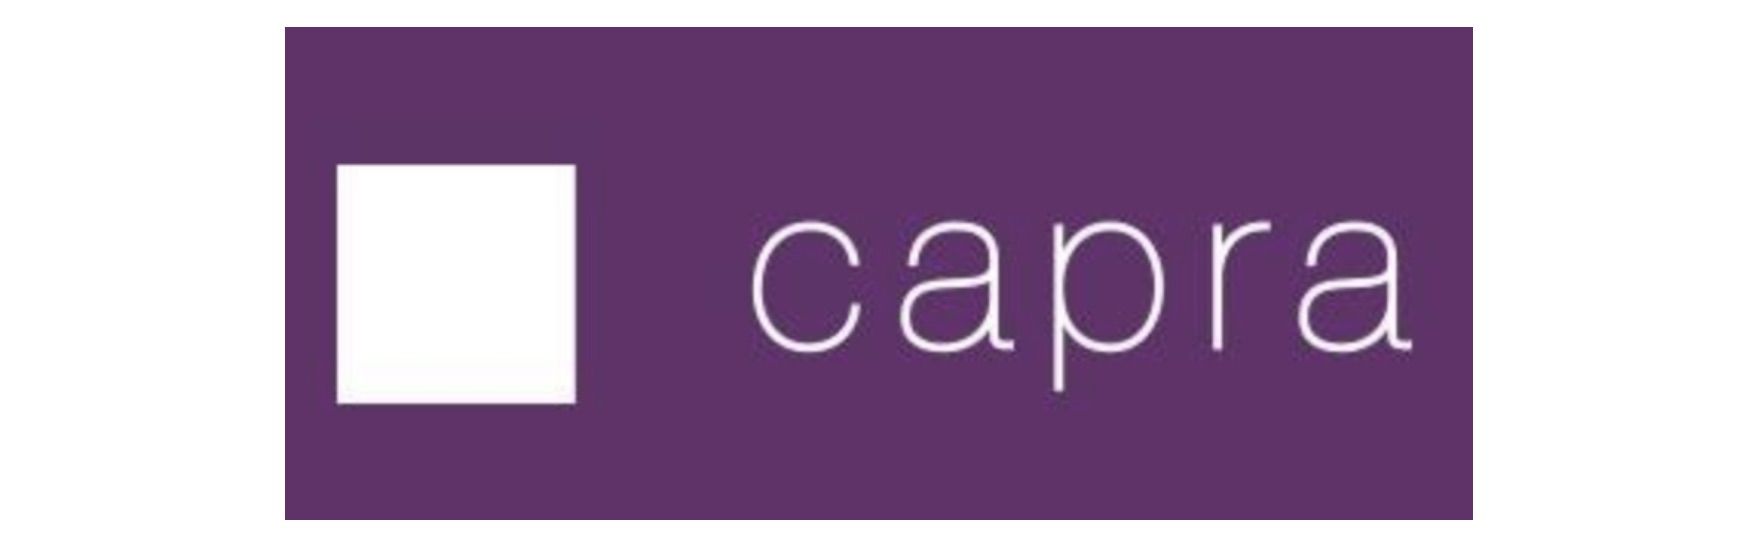 Merkidentiteit advocatenkantoor Capra case logo